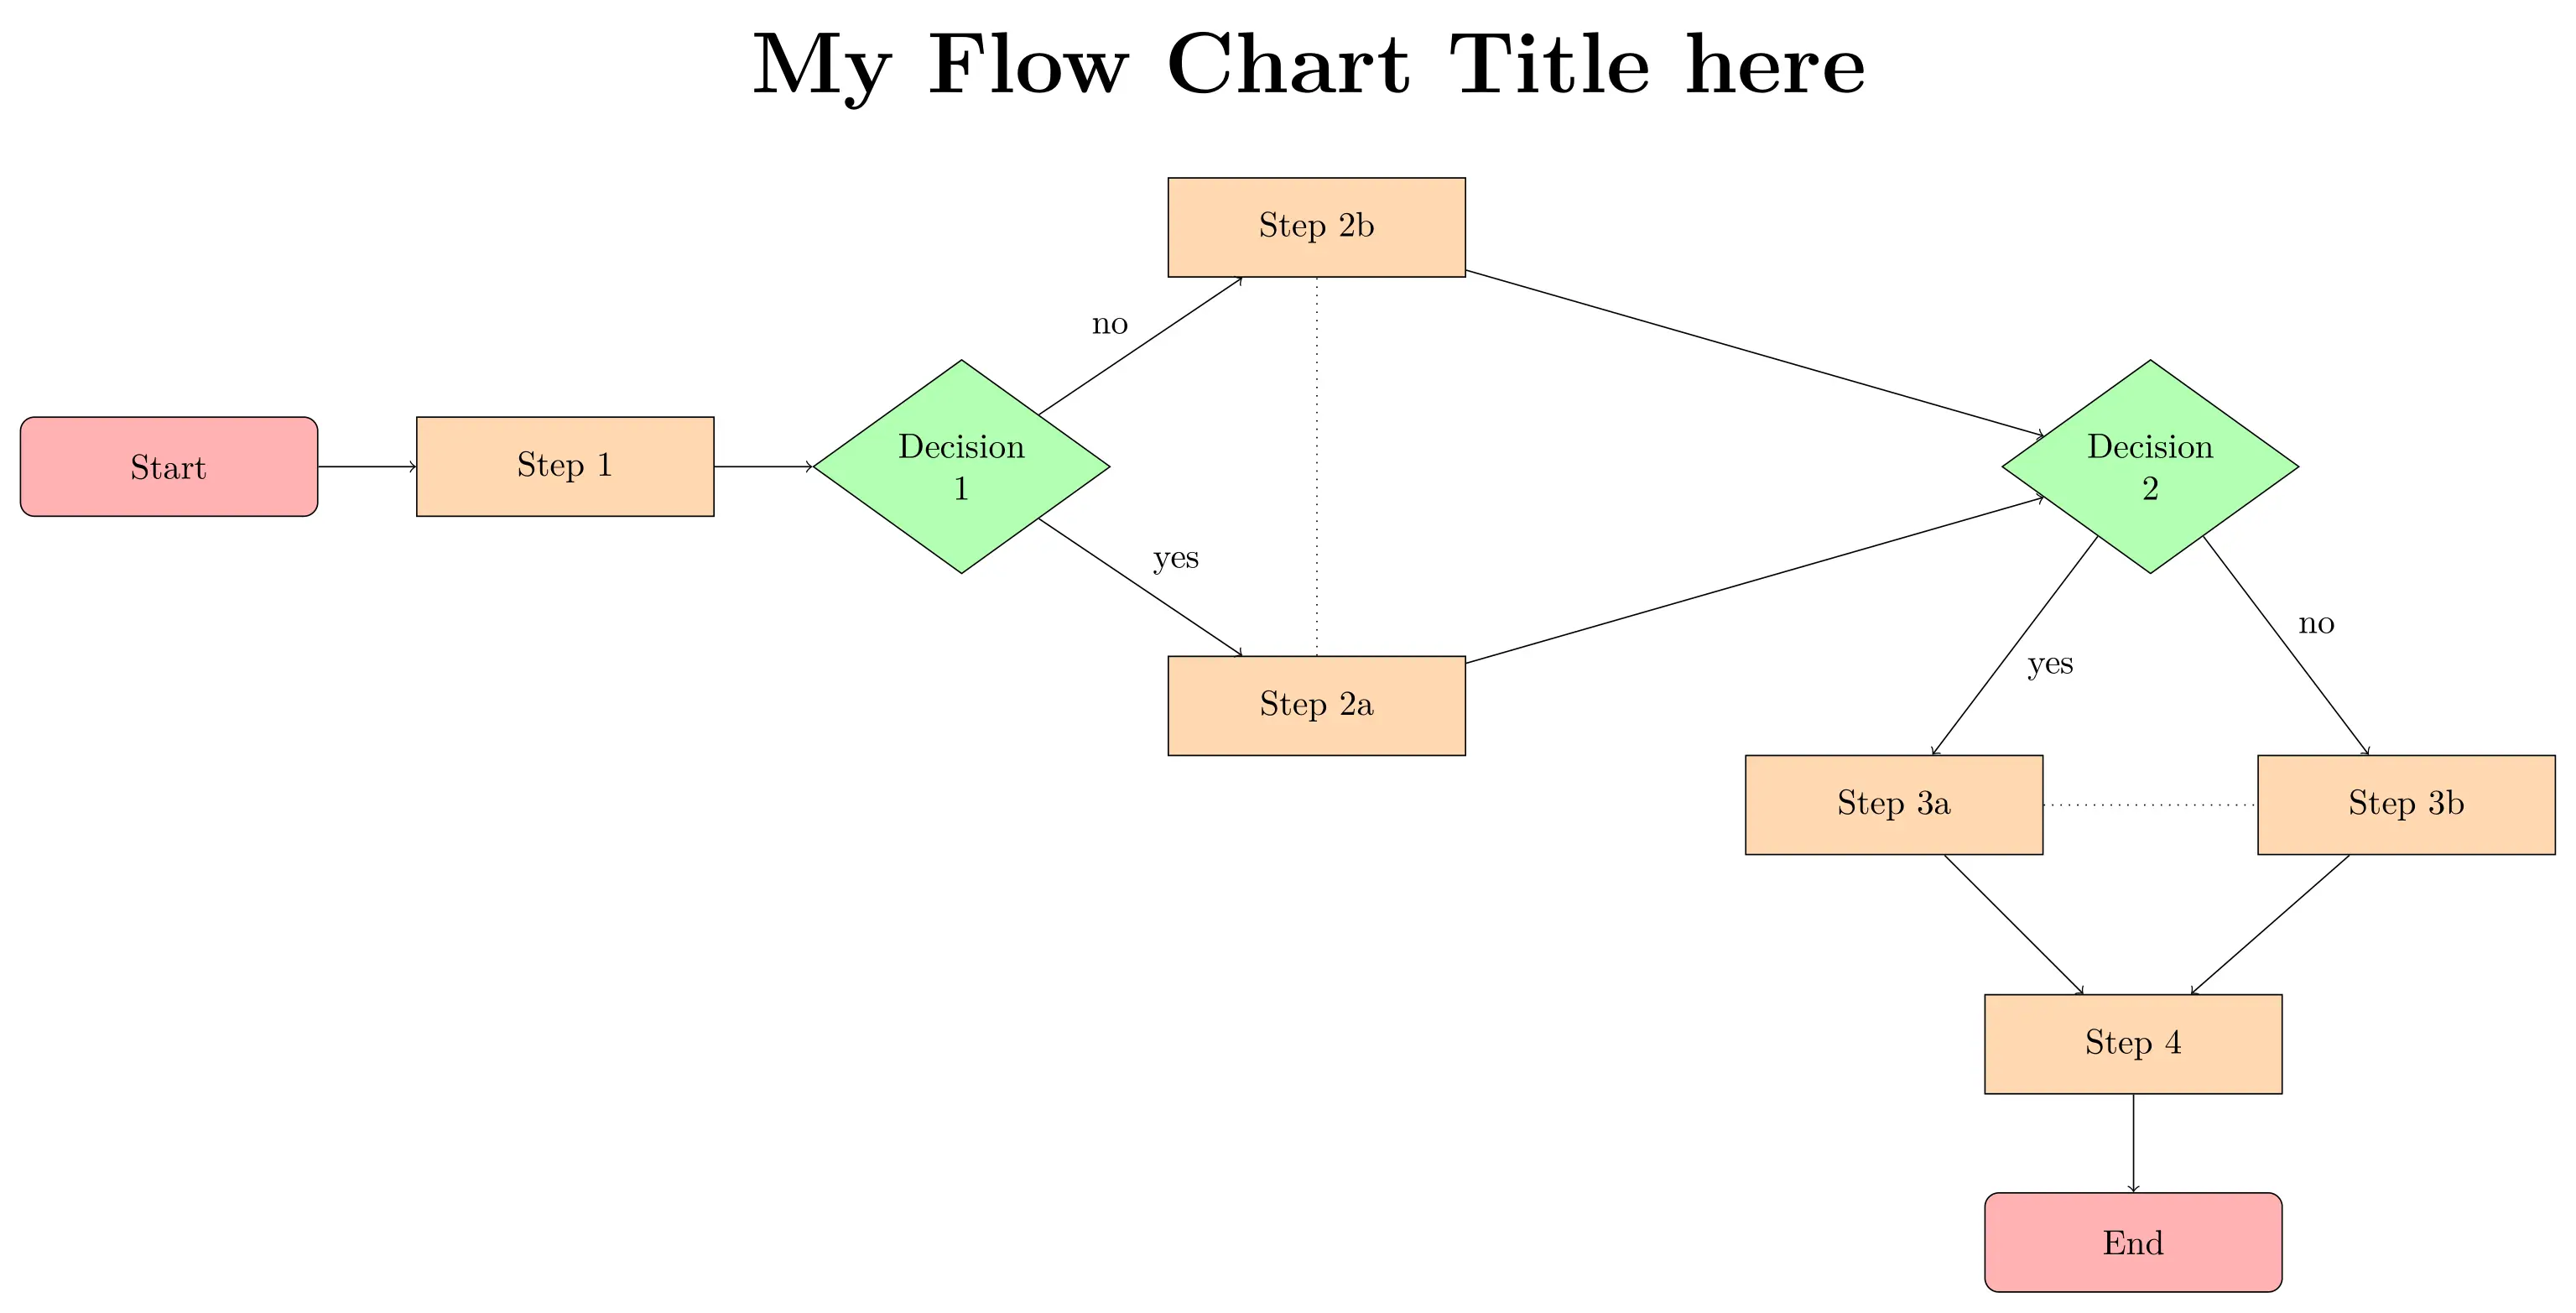 Horizontal flow chart using LaTeX and TikZ package